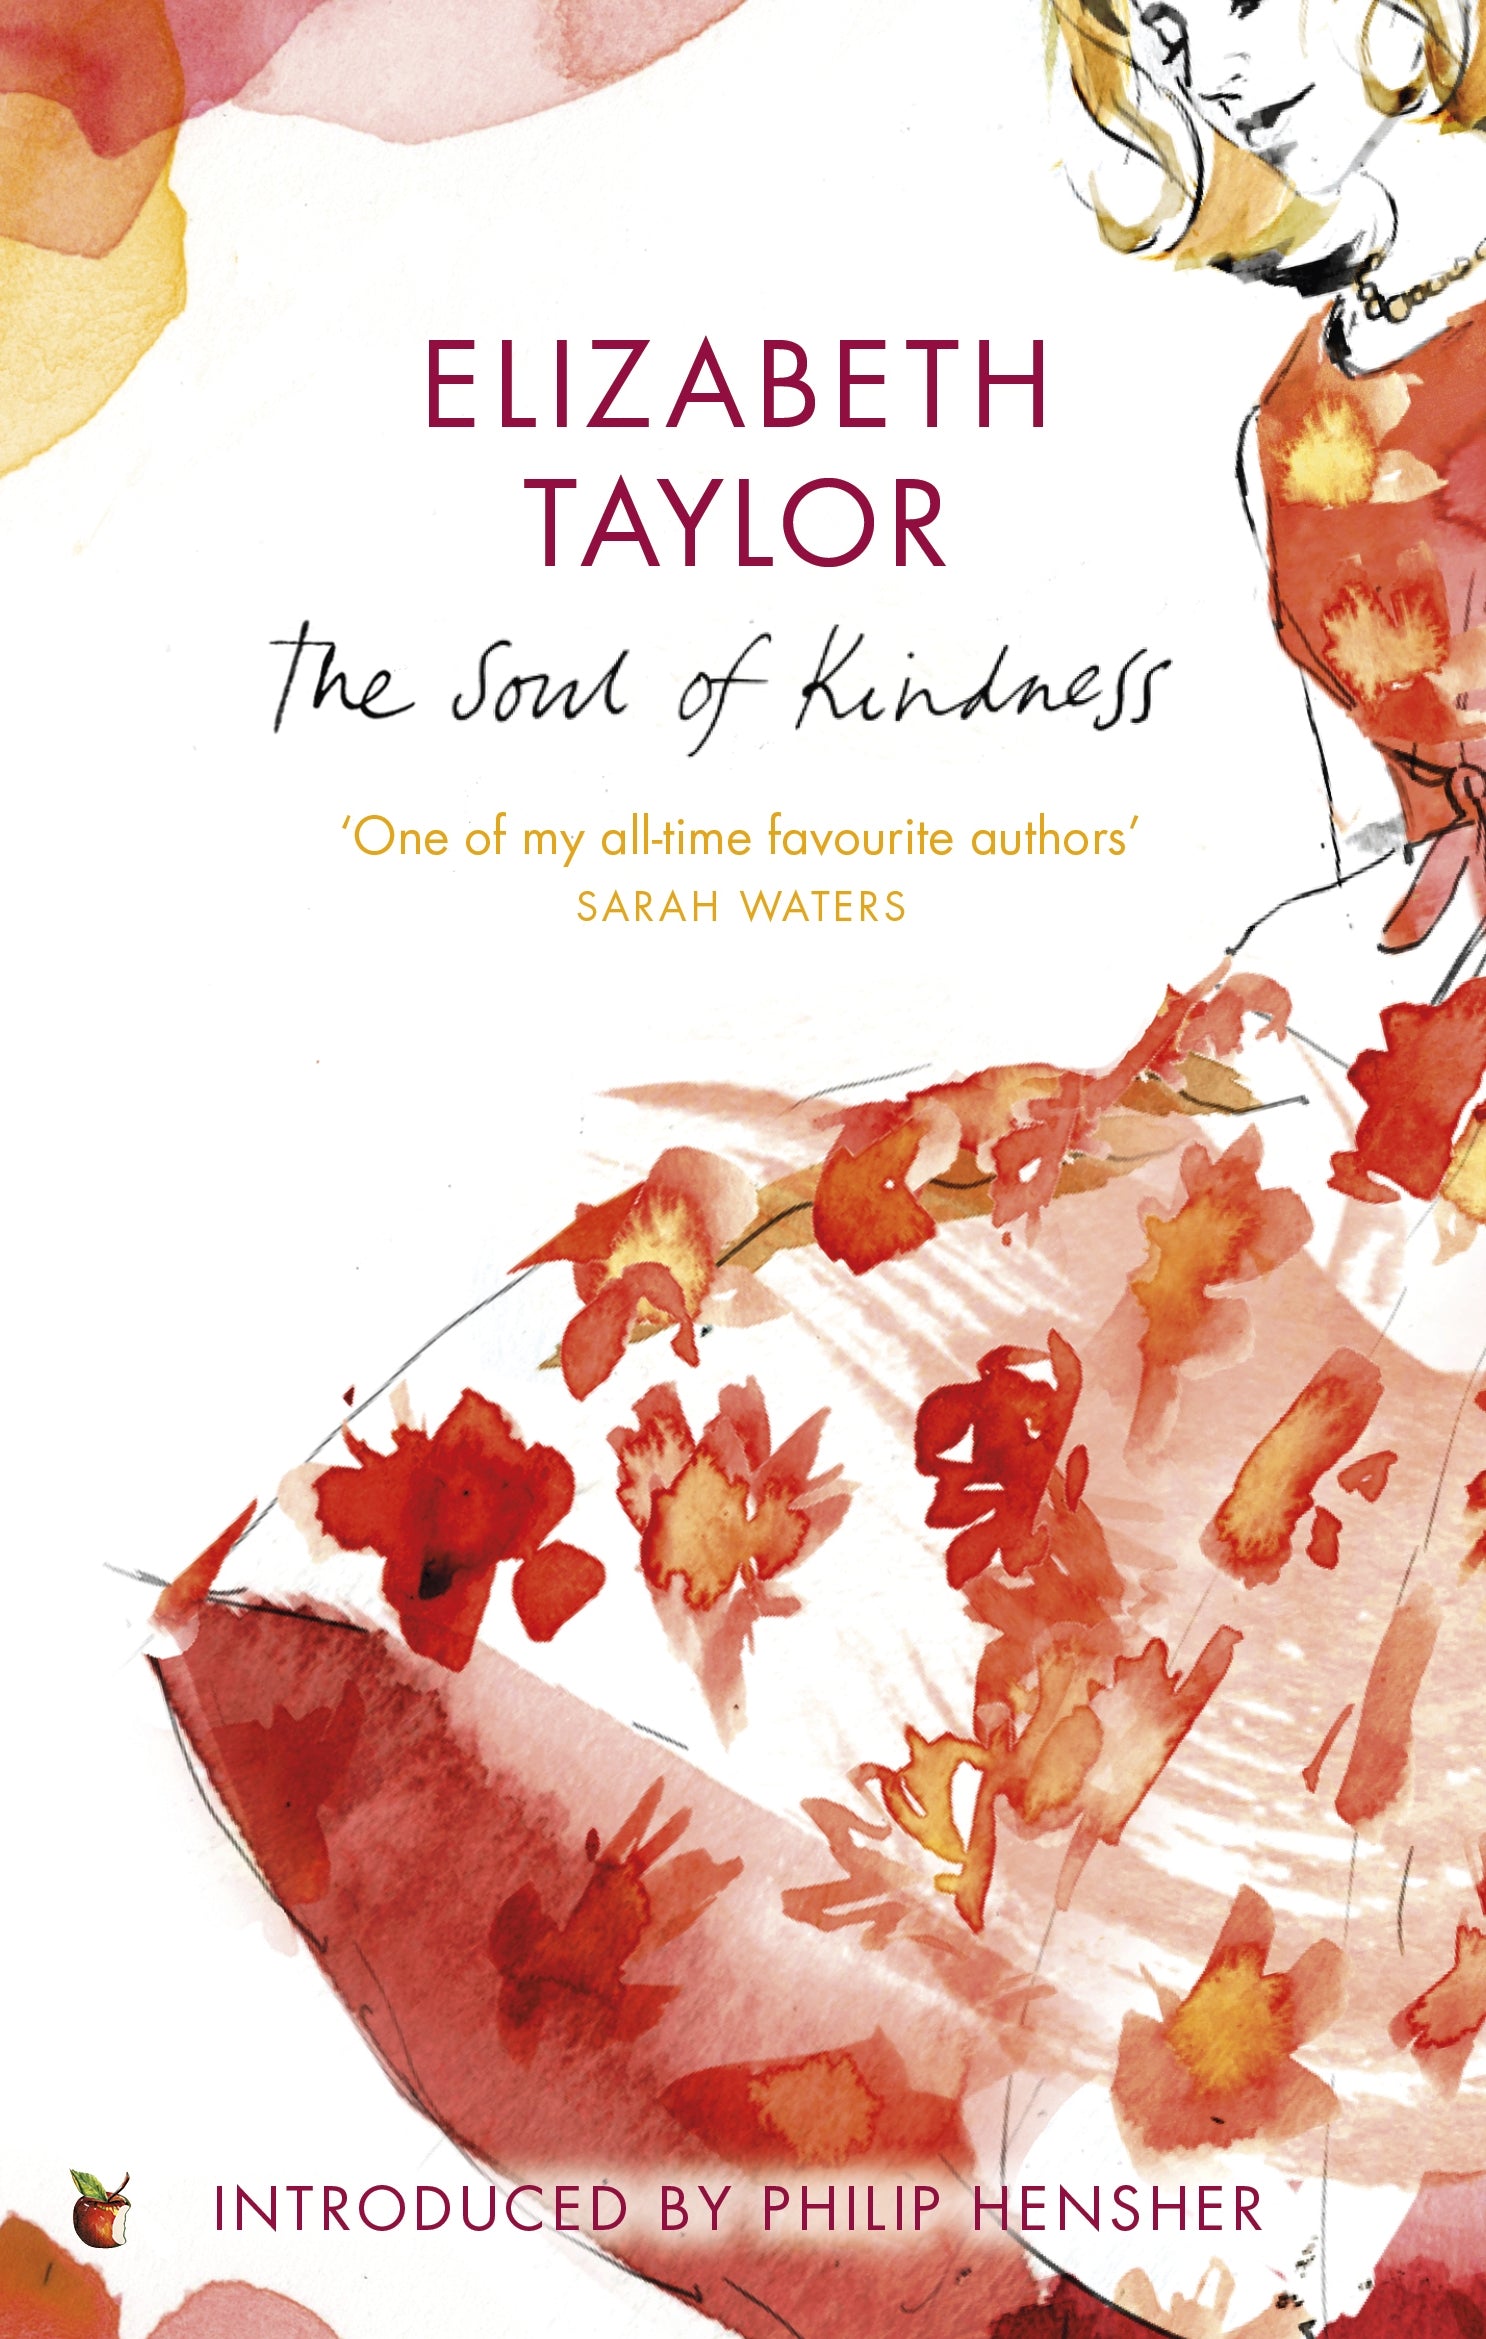 The Soul Of Kindness by Elizabeth Taylor